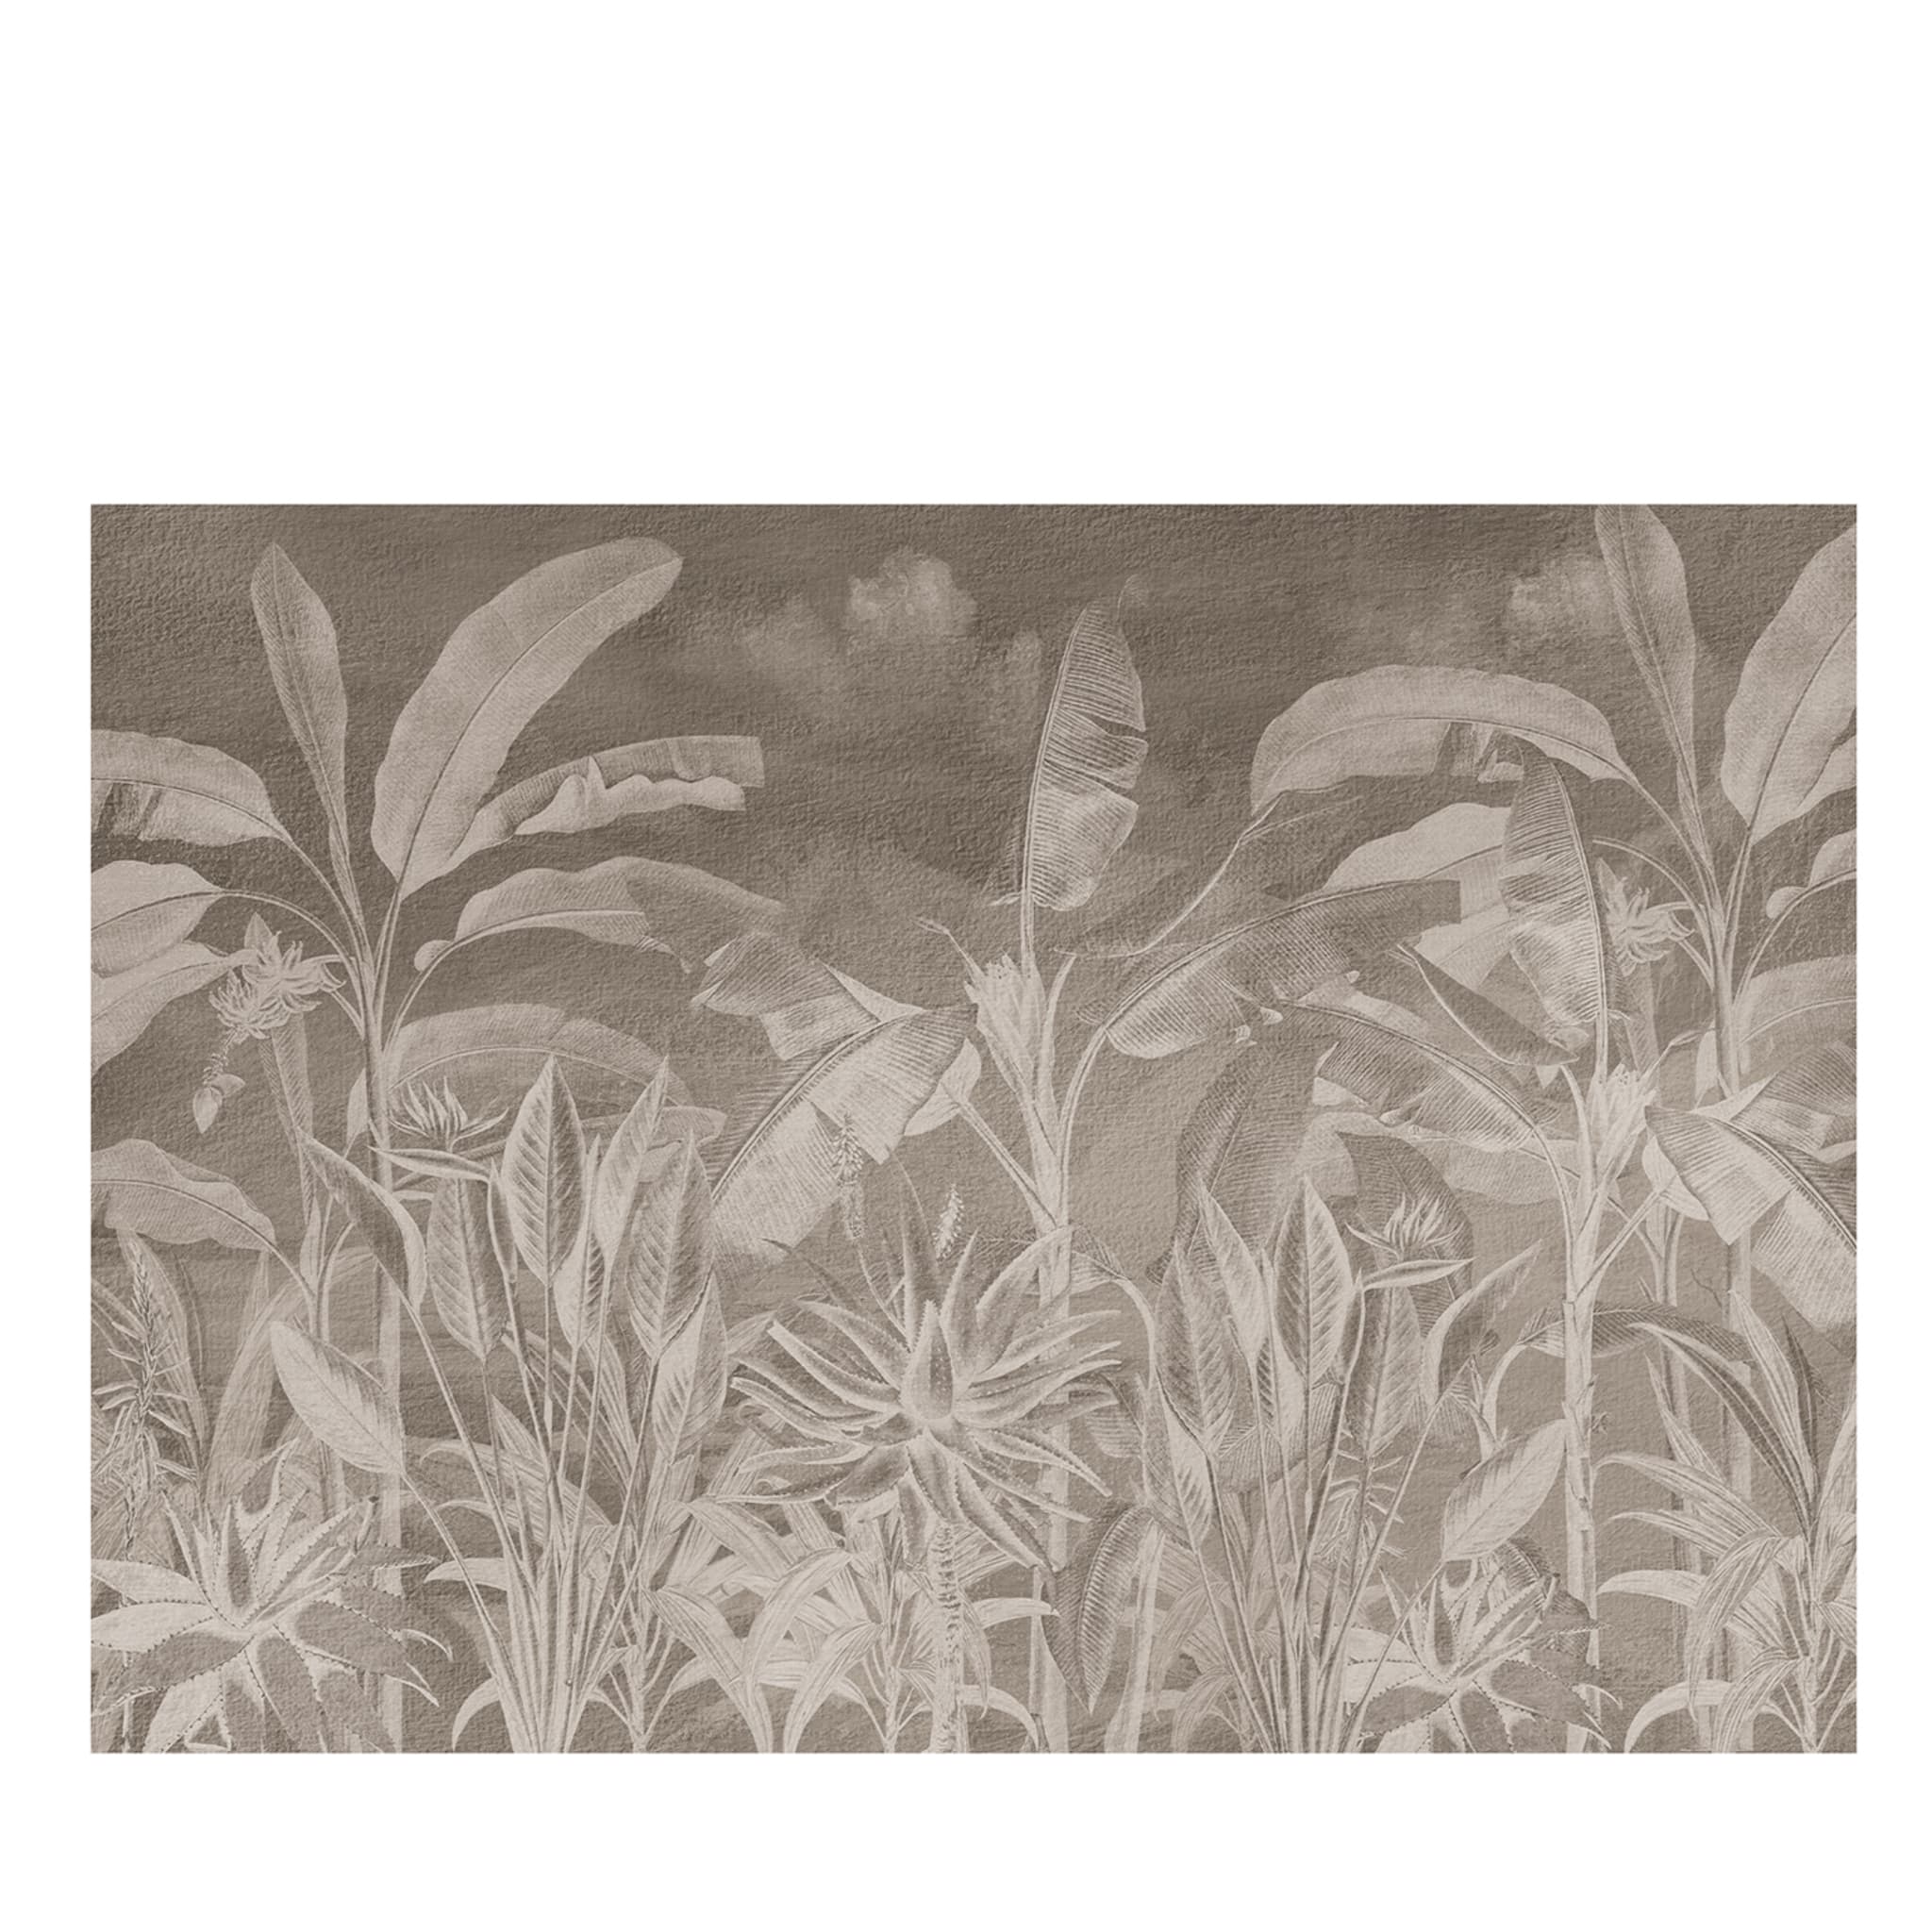 Brown tones plants textured wallpaper - Main view